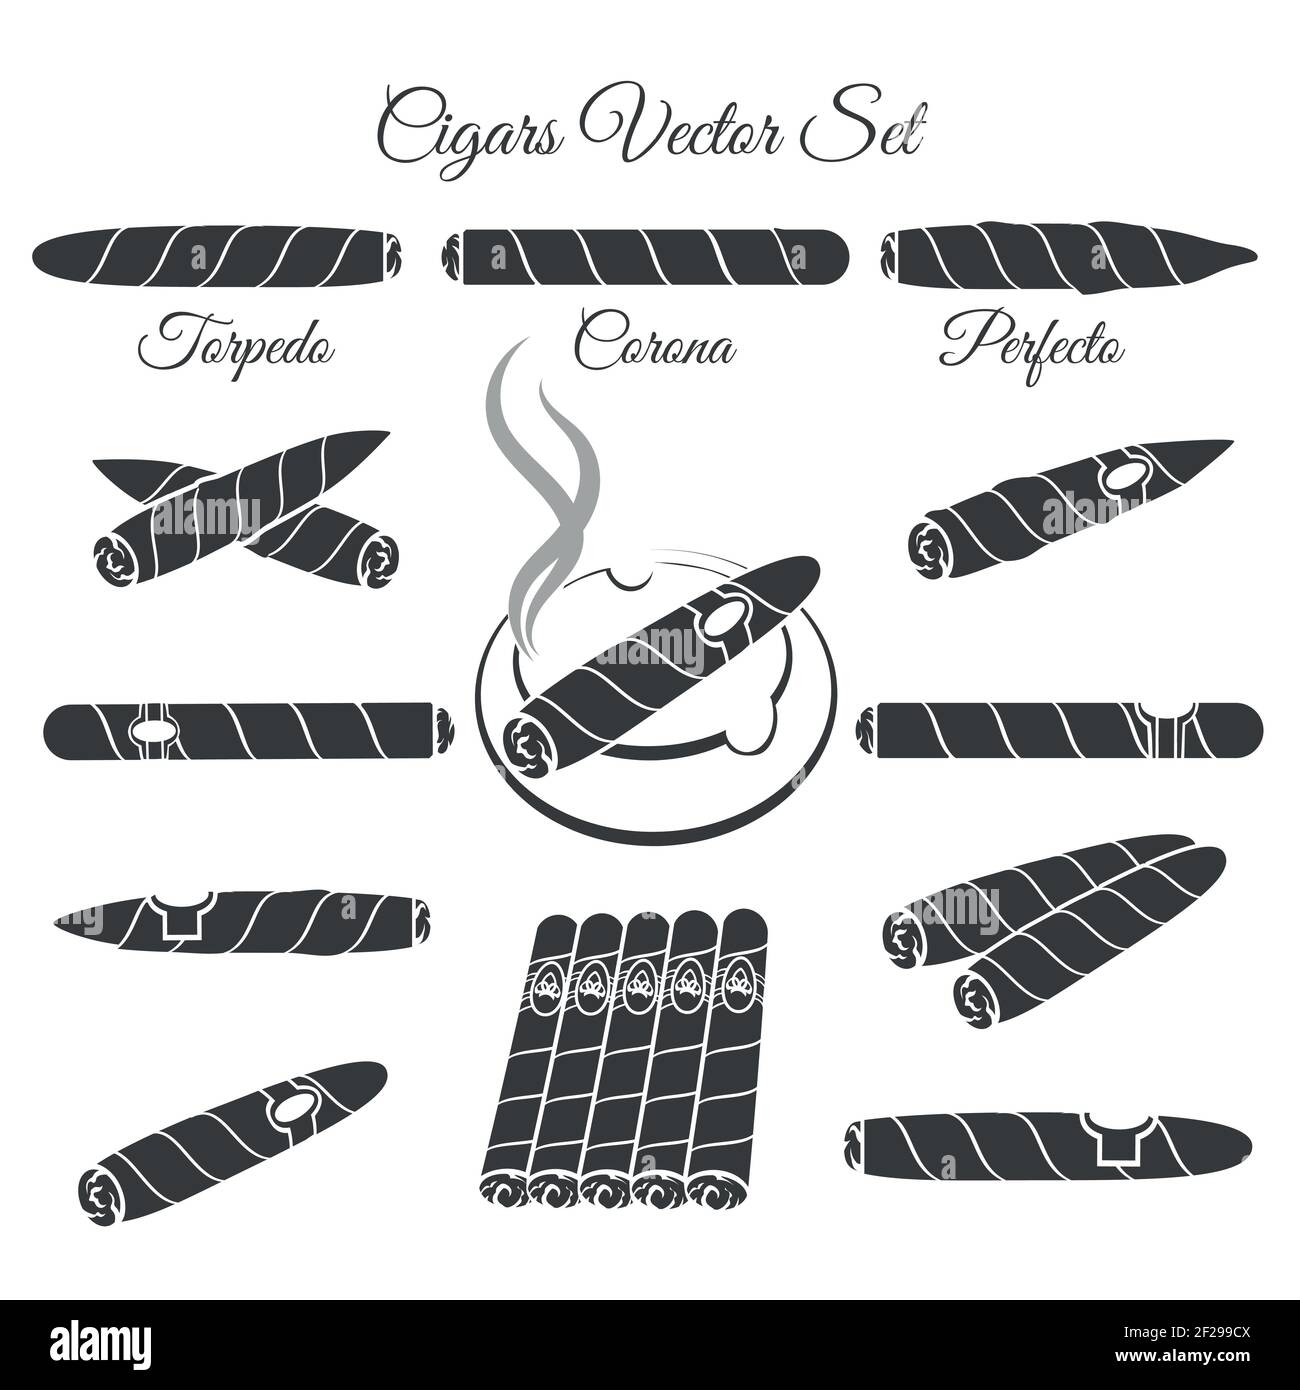 Hand drawn cigars vector. Torpedo corona and perfecto, culture lifestyle illustration. Vector cigar icons Stock Vector